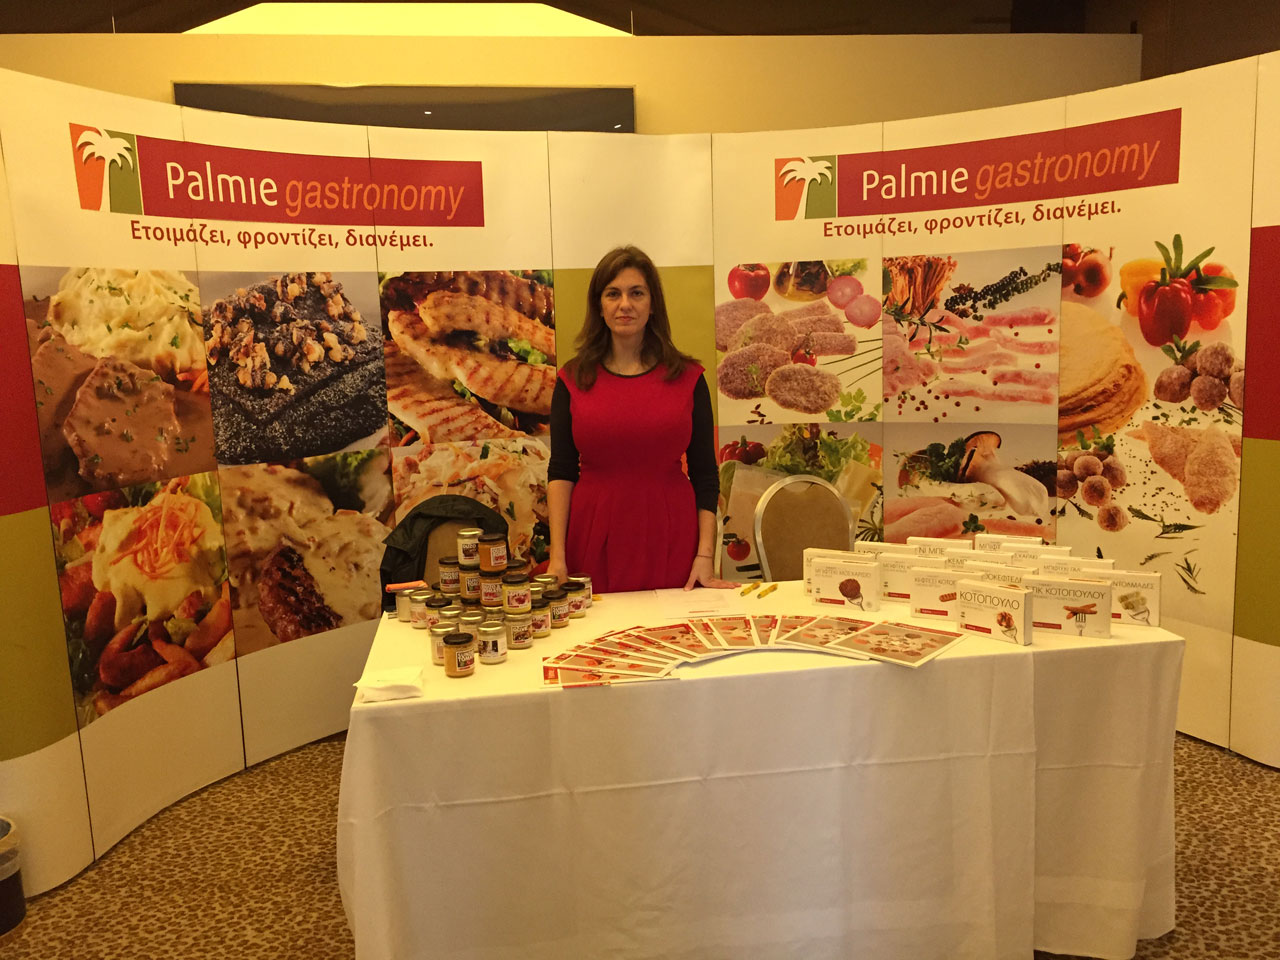  Successful Palmie gastronomy’s participation in Super Market Forum 2015